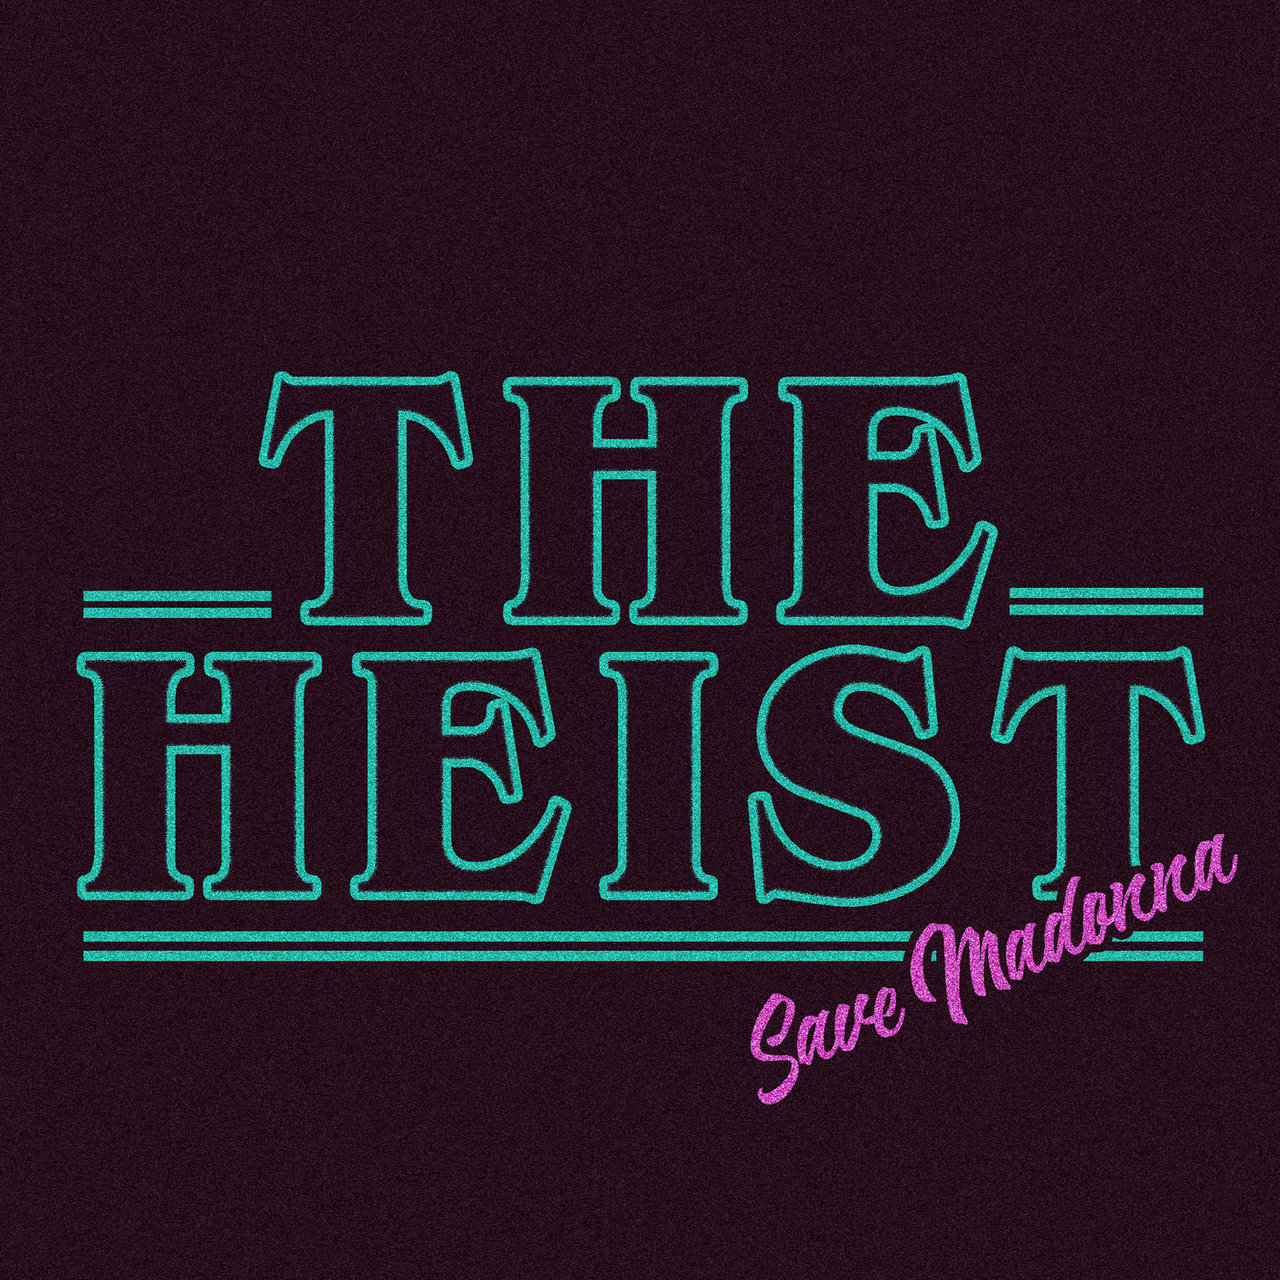 The Heist Save Madonna cover artwork